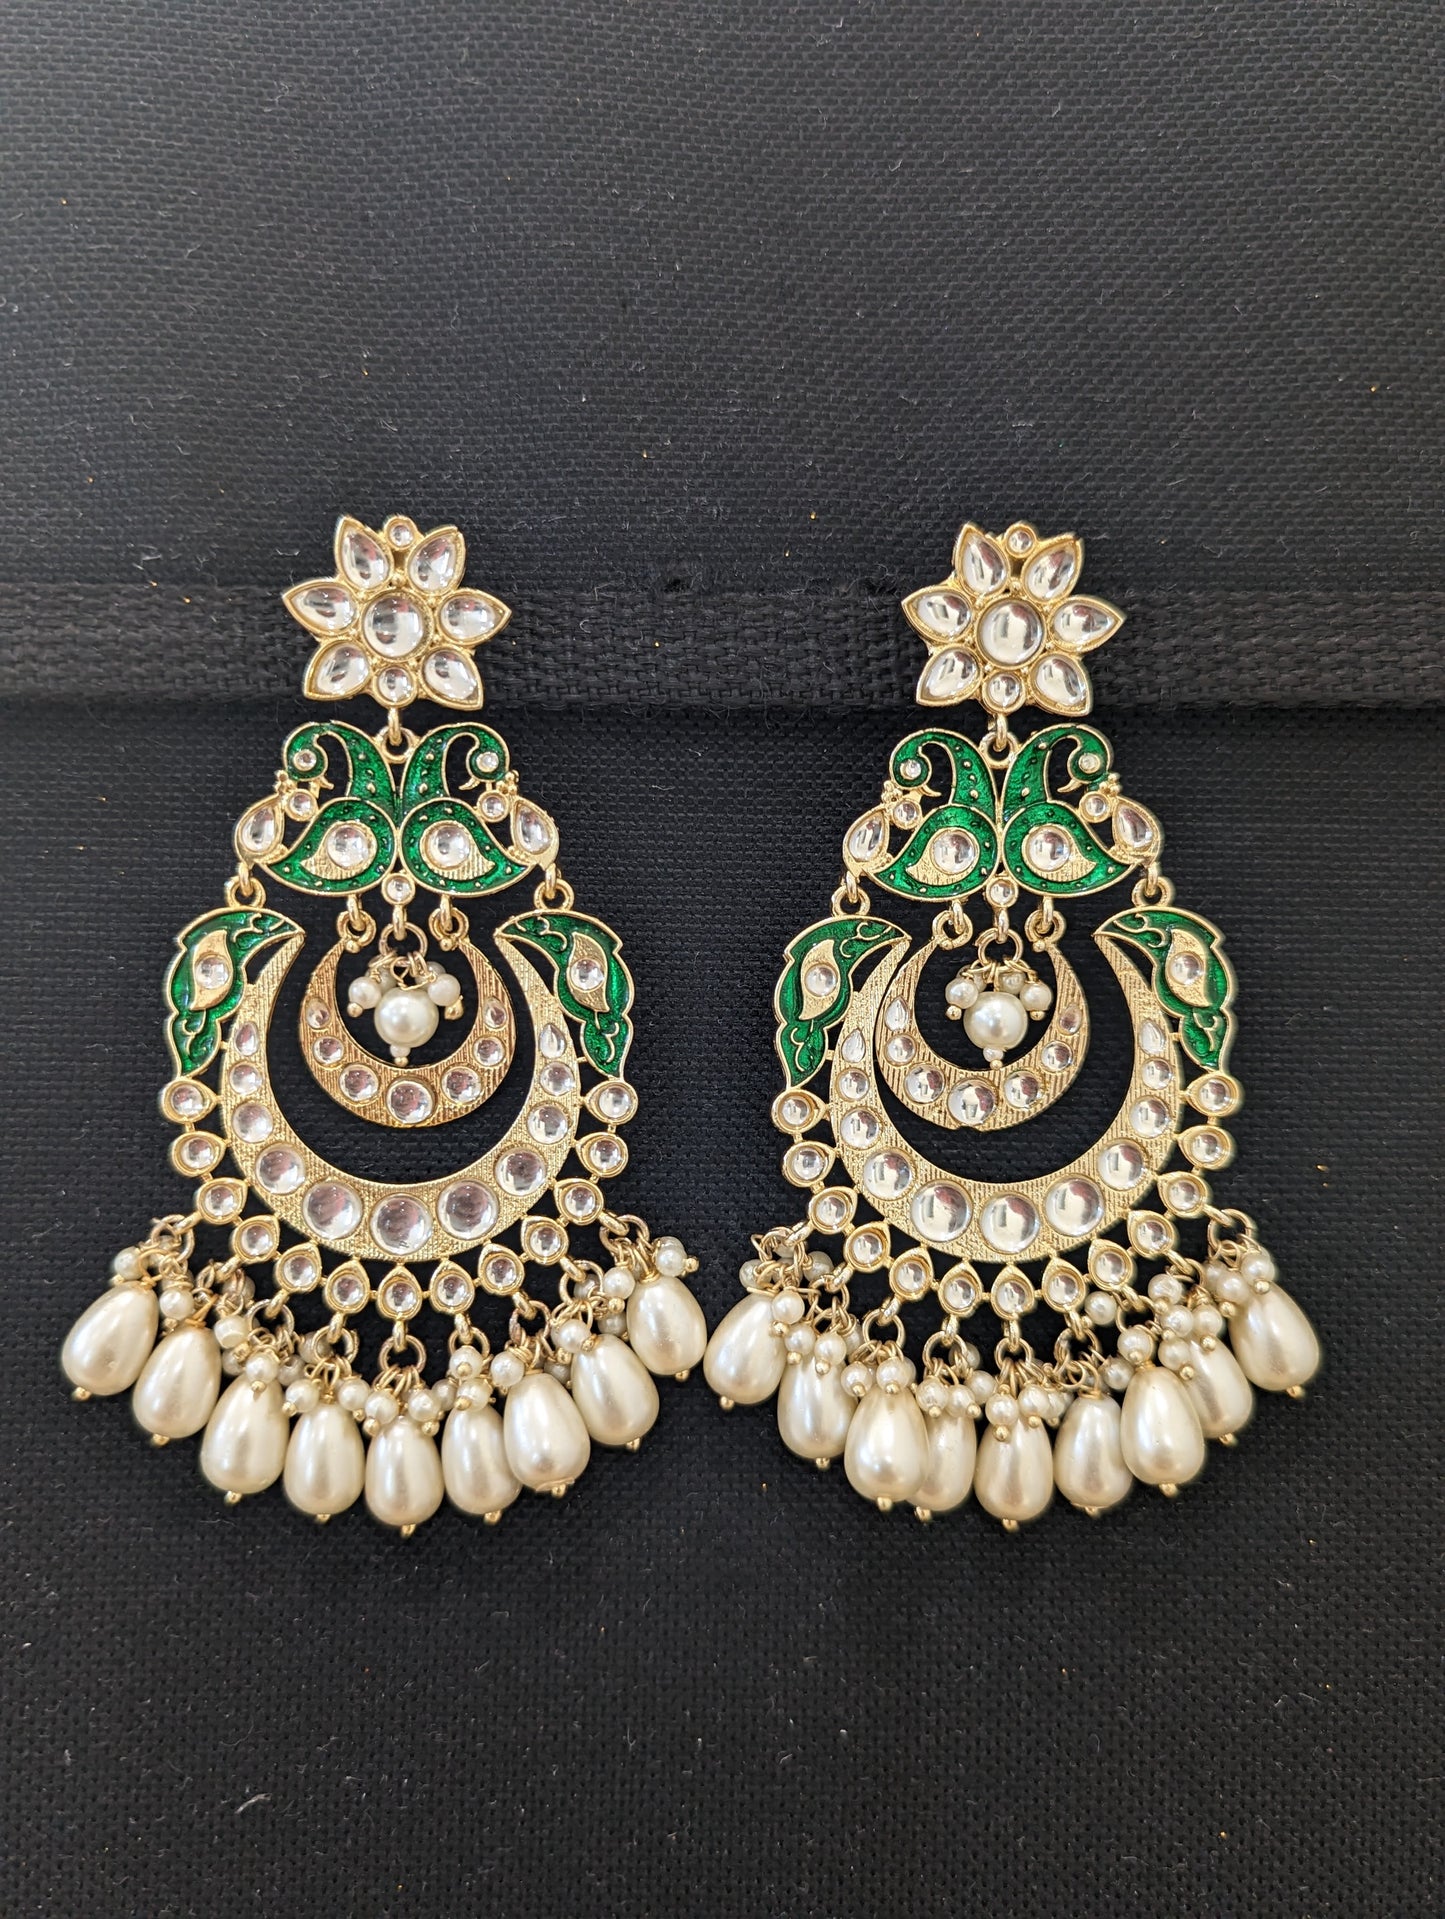 XL size Chandbali Kundan Peacock Statement Earrings